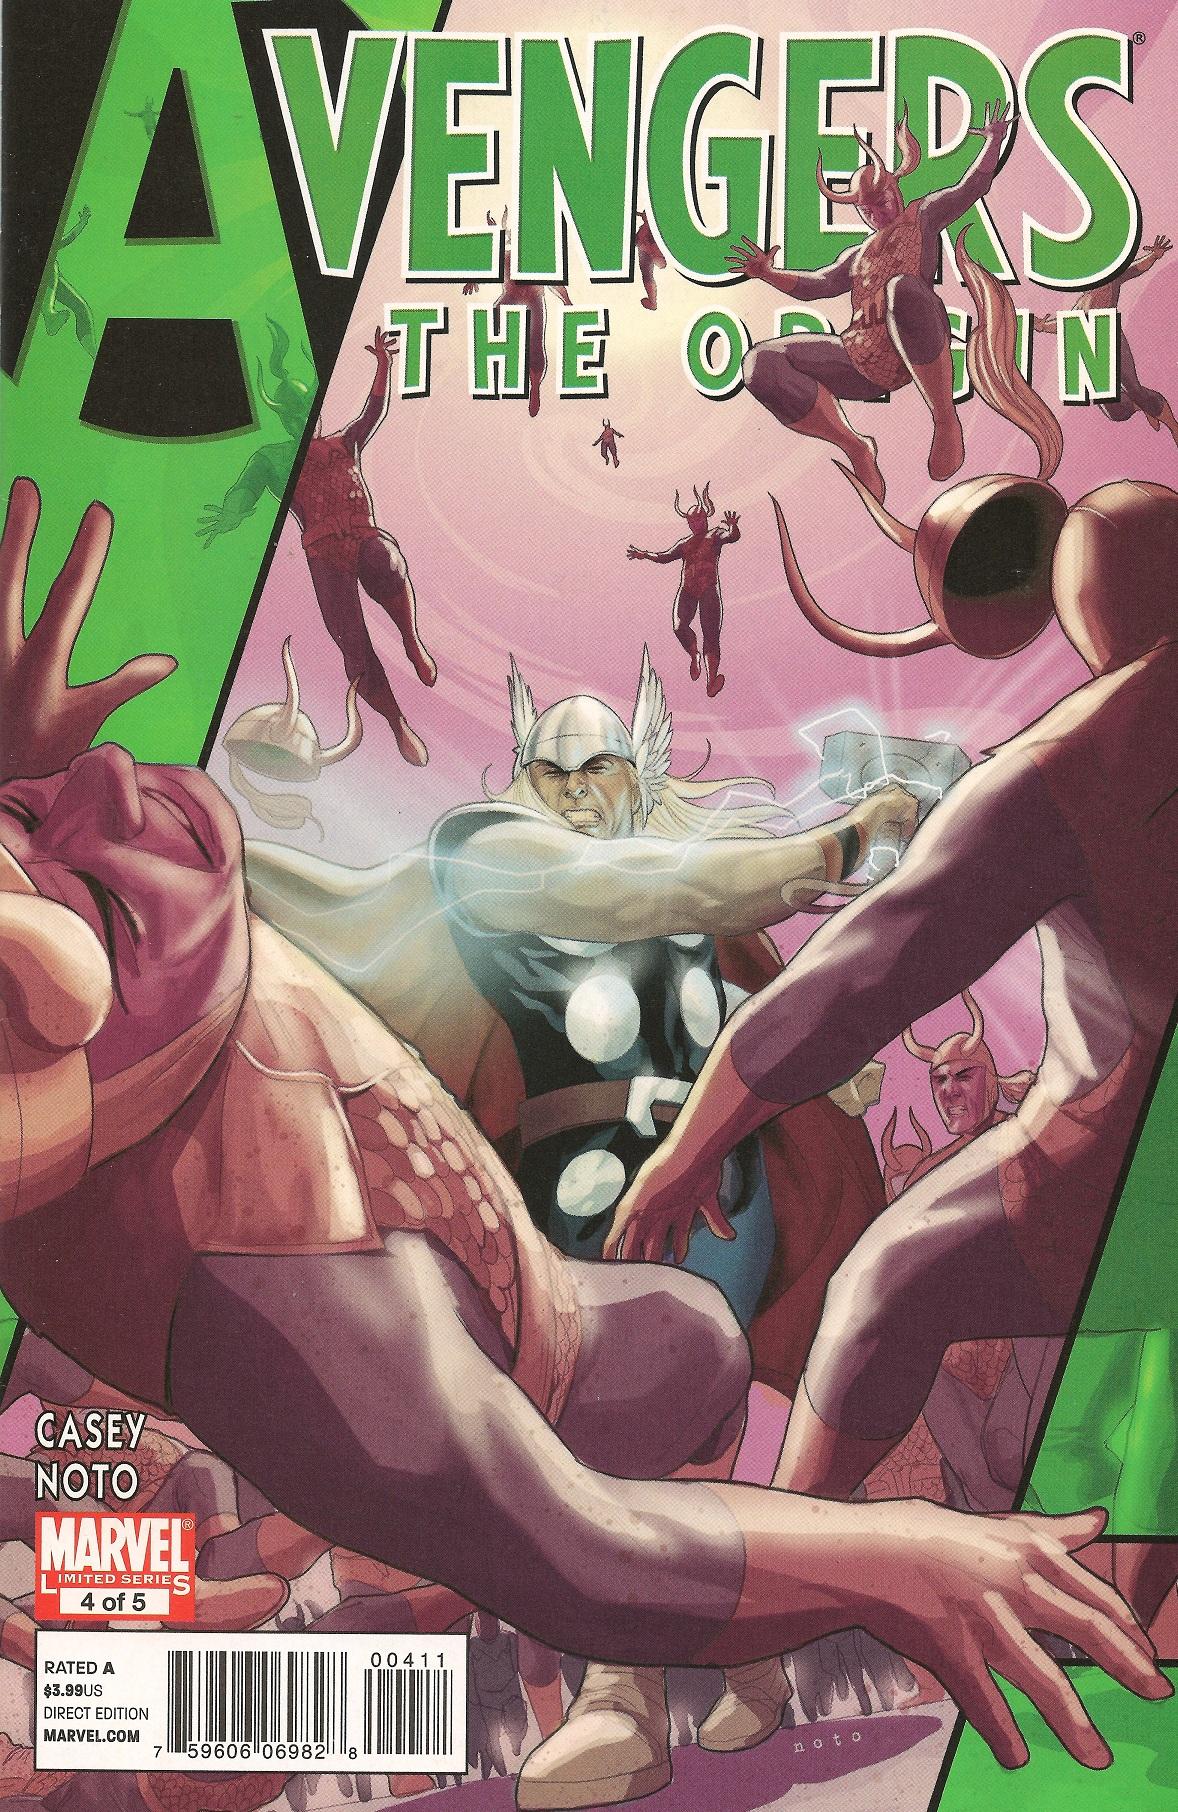 Avengers: The Origin Vol. 1 #4